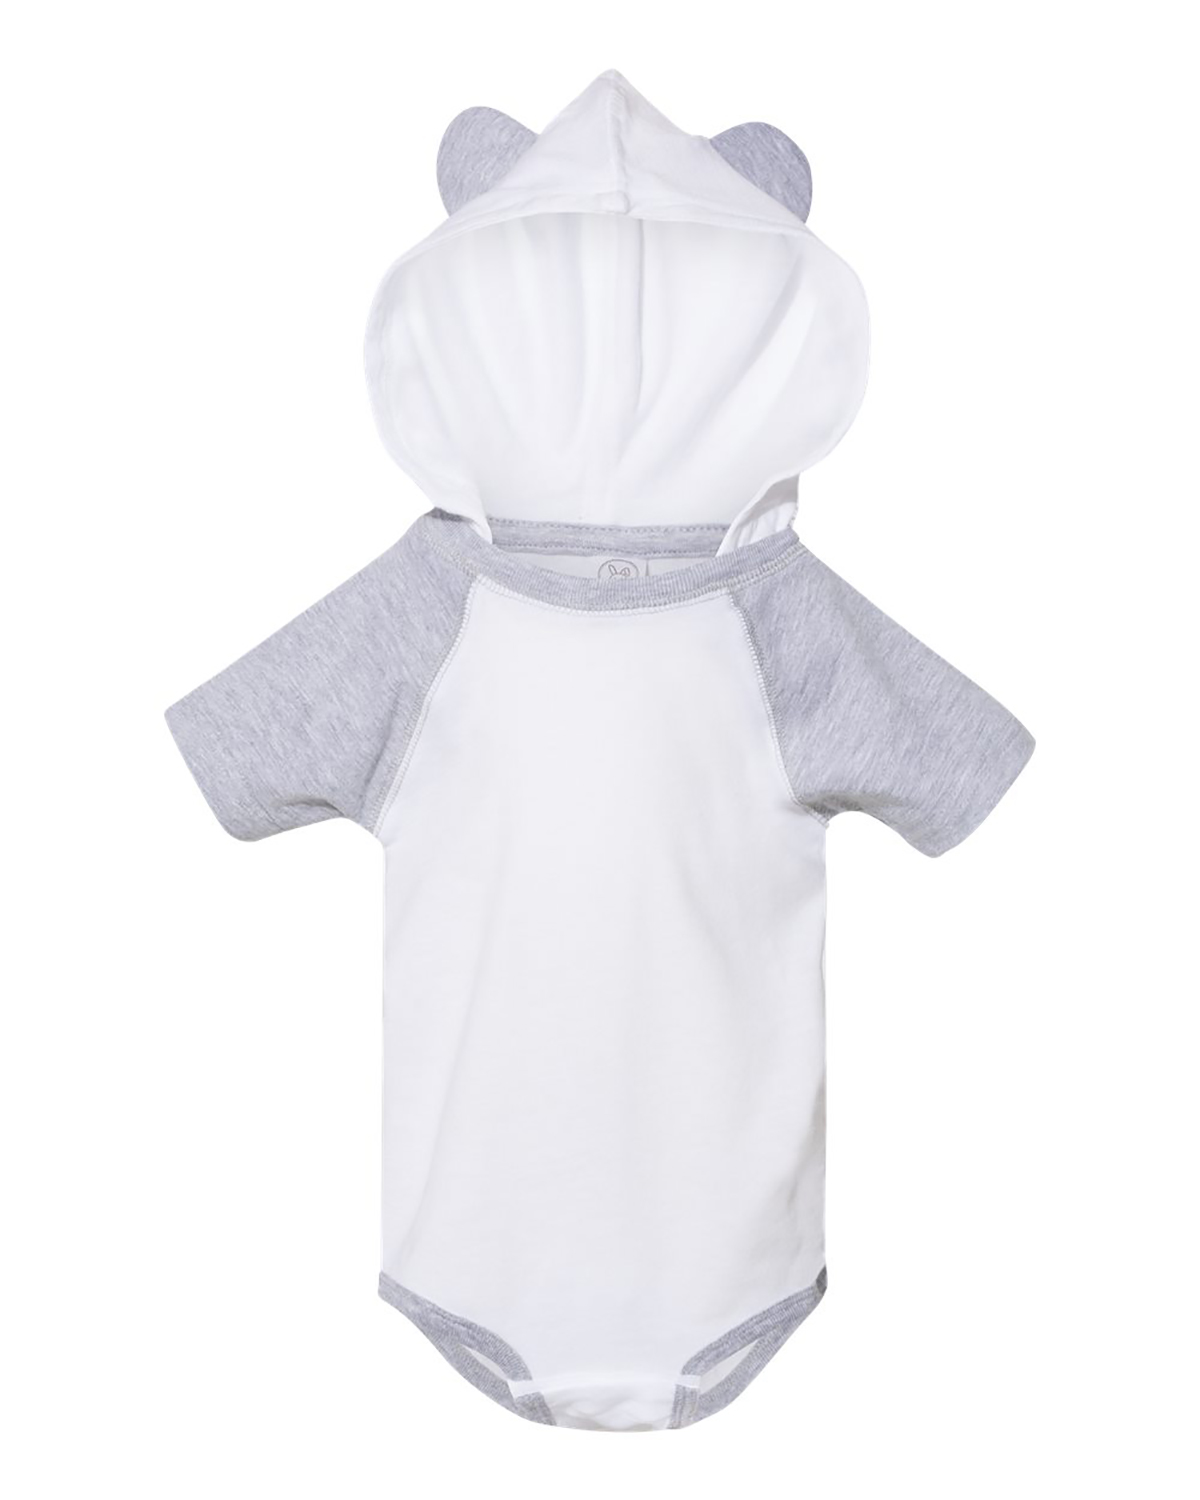 'Rabbit Skins 4417 Fine Jersey Infant Short Sleeve Raglan Bodysuit with Hood & Ears'